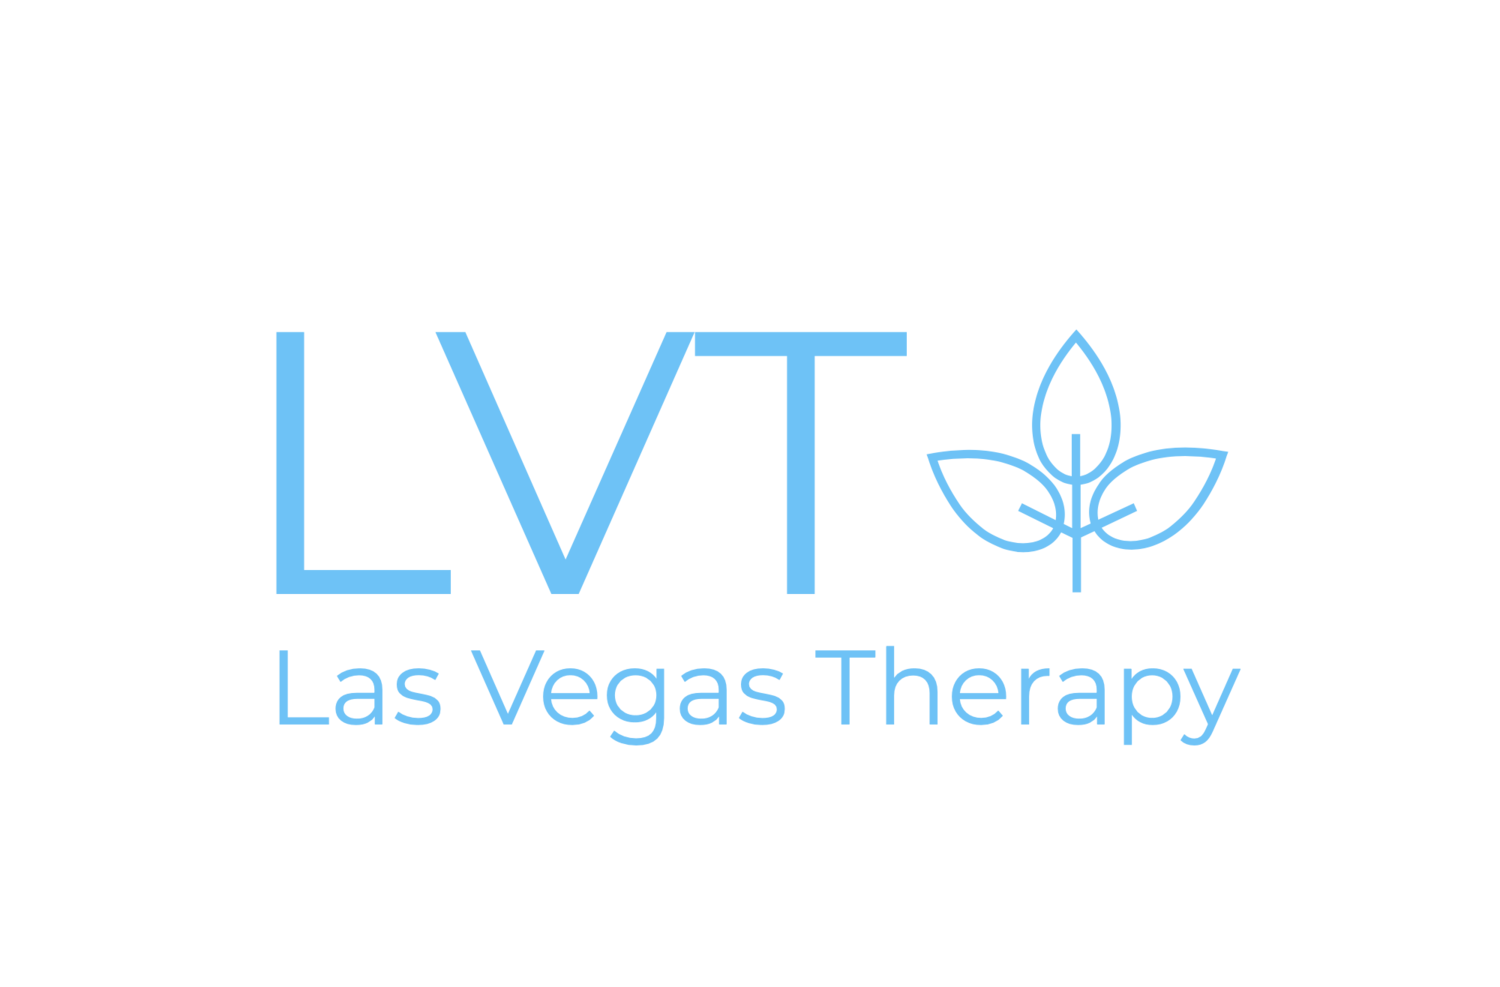 Las Vegas Therapy